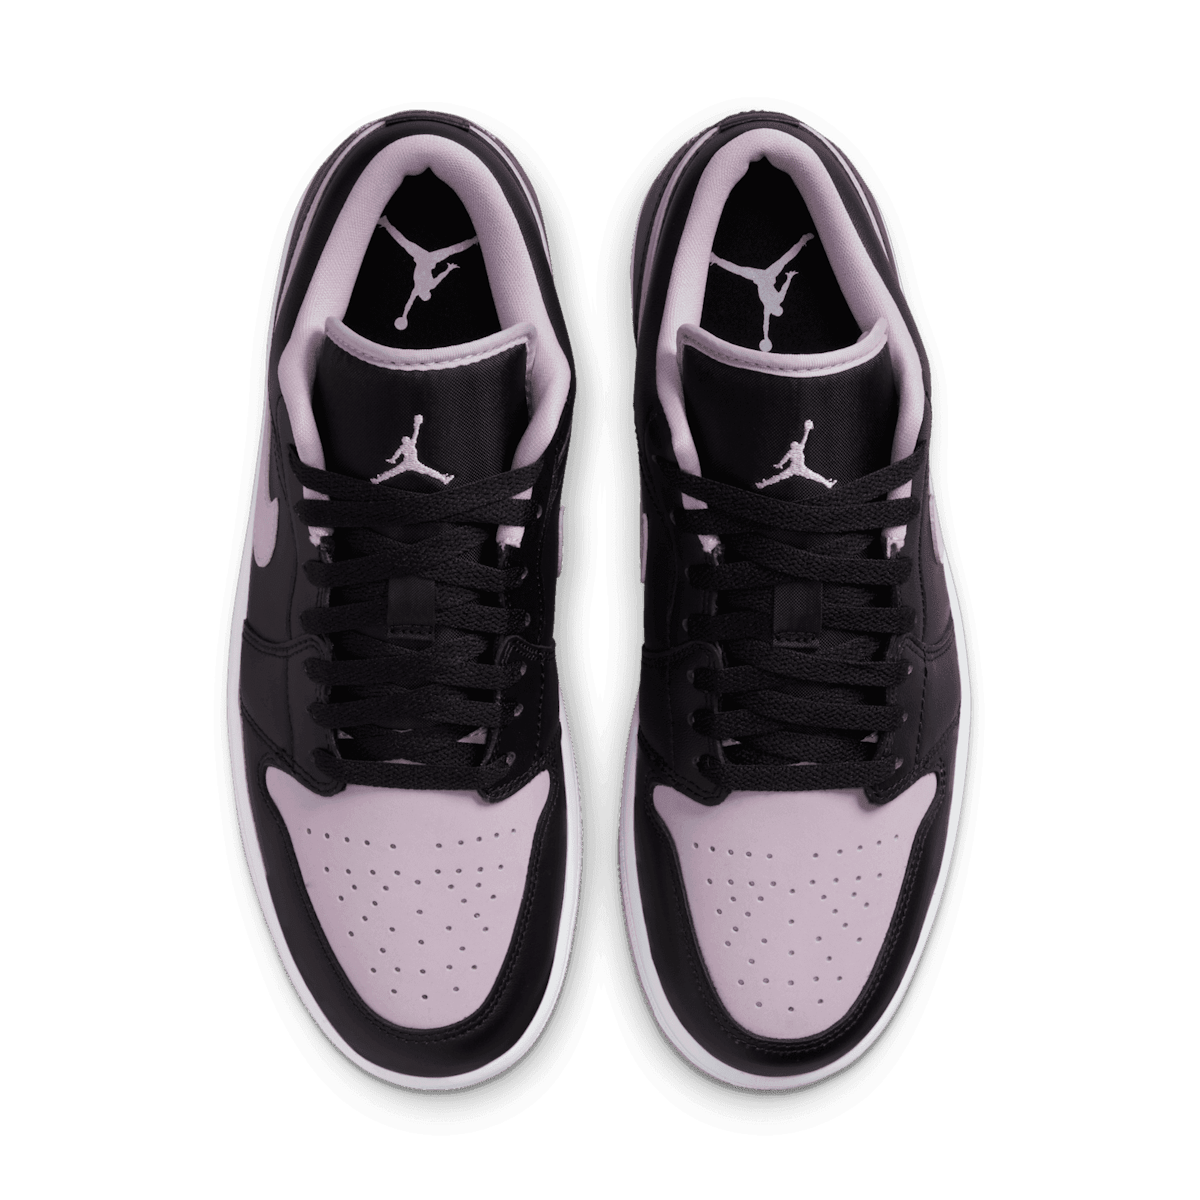 Air Jordan 1 Low SE Black Iced Lilac Angle 1